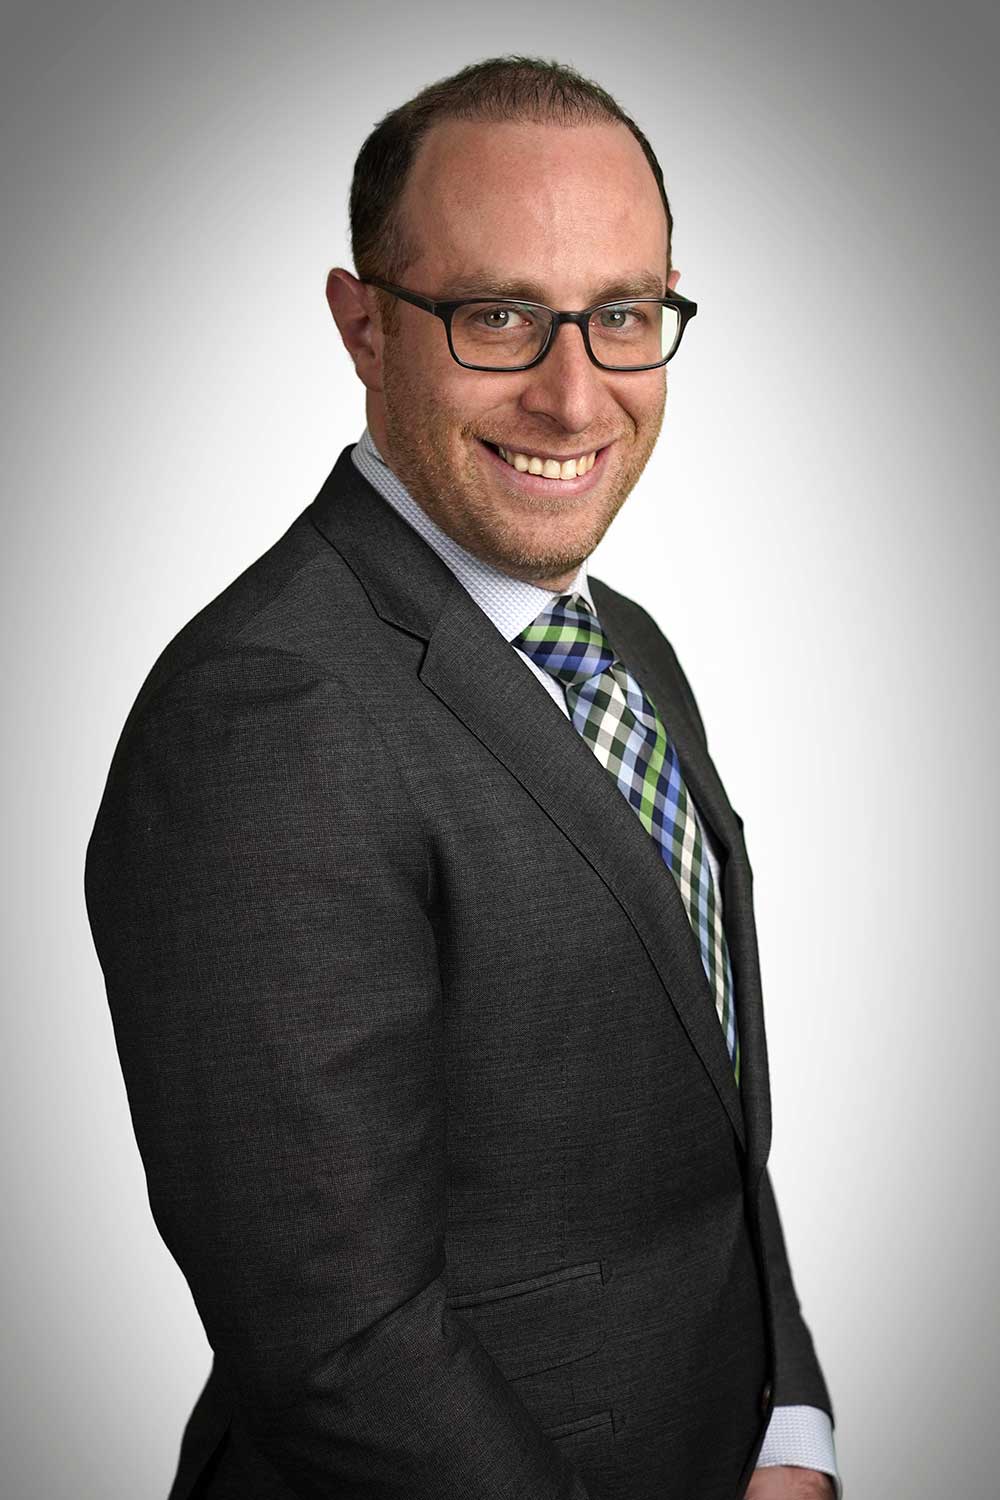 Headshot of neurosurgeon Joshua Marcus wearing a suit and smiling.